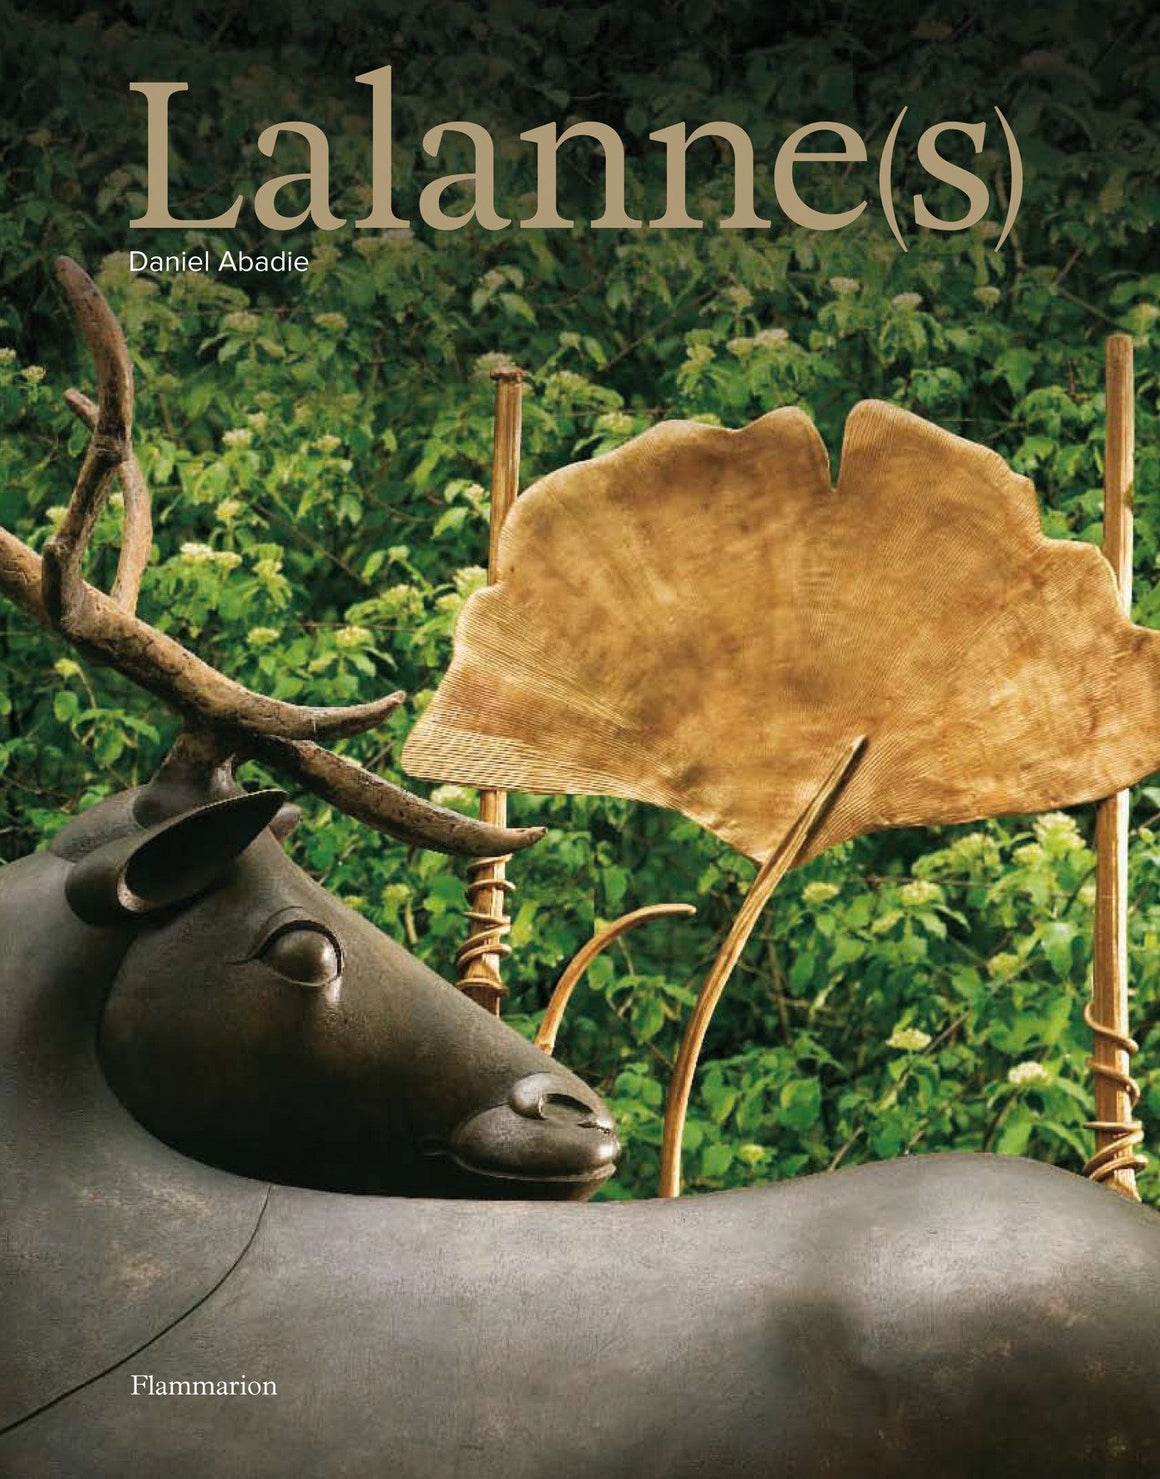 "Lalanne(s)" 2008 ABADIE, Daniel (SOLD)